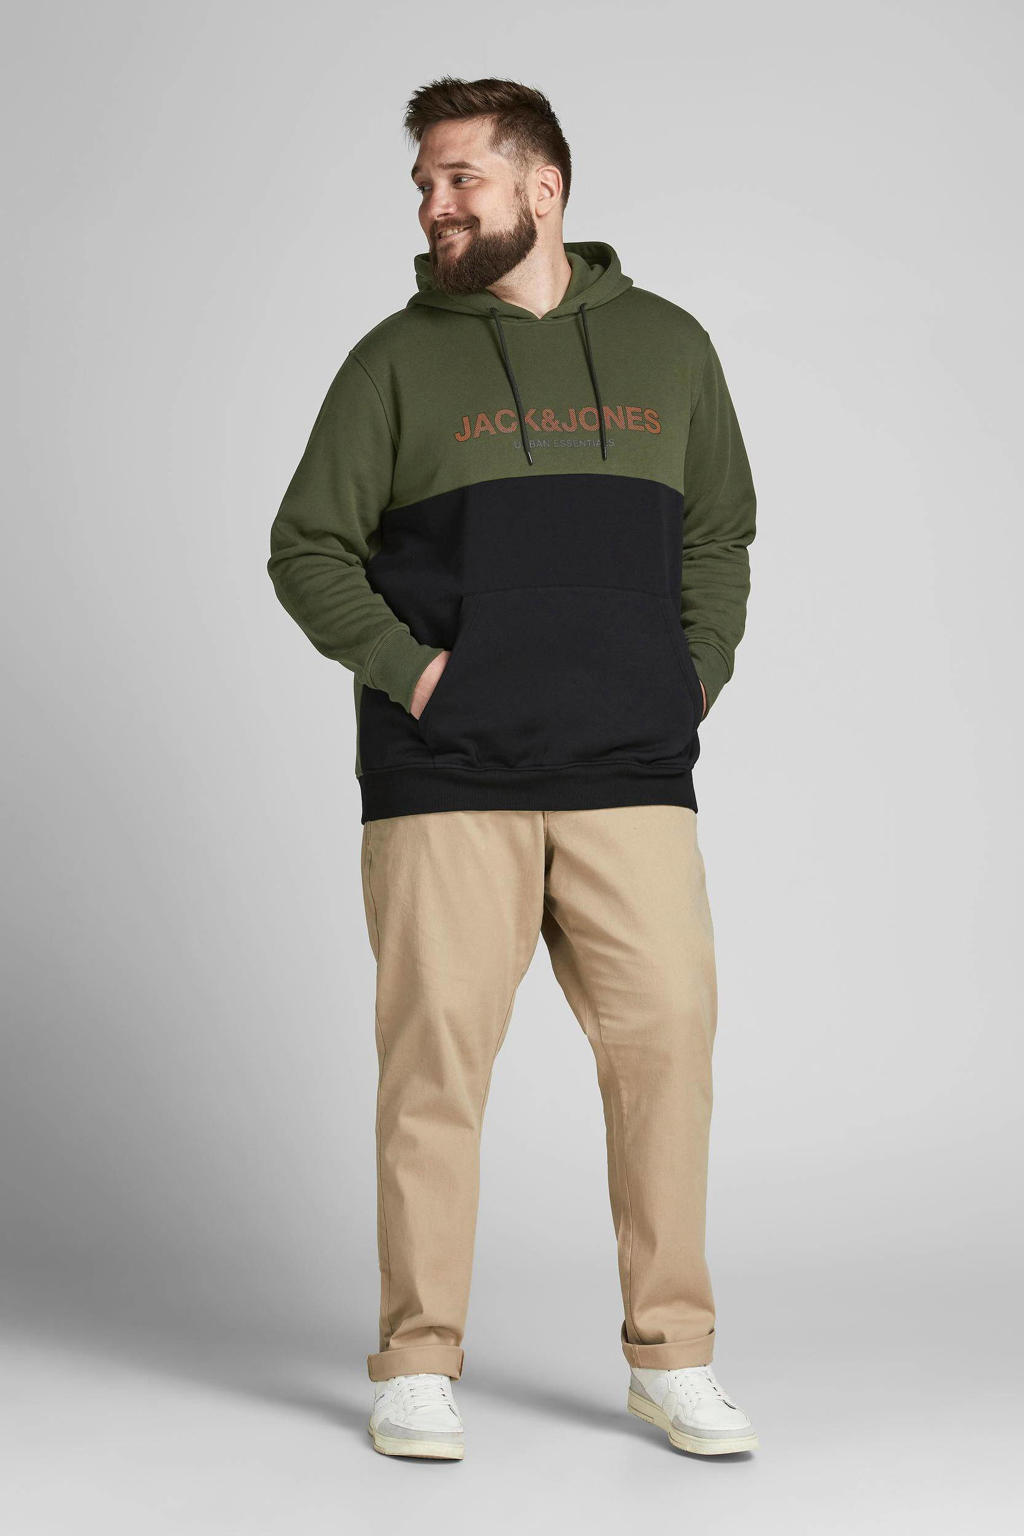 JACK & JONES PLUS SIZE hoodie JJEURBAN Plus Size met logo groen/zwart